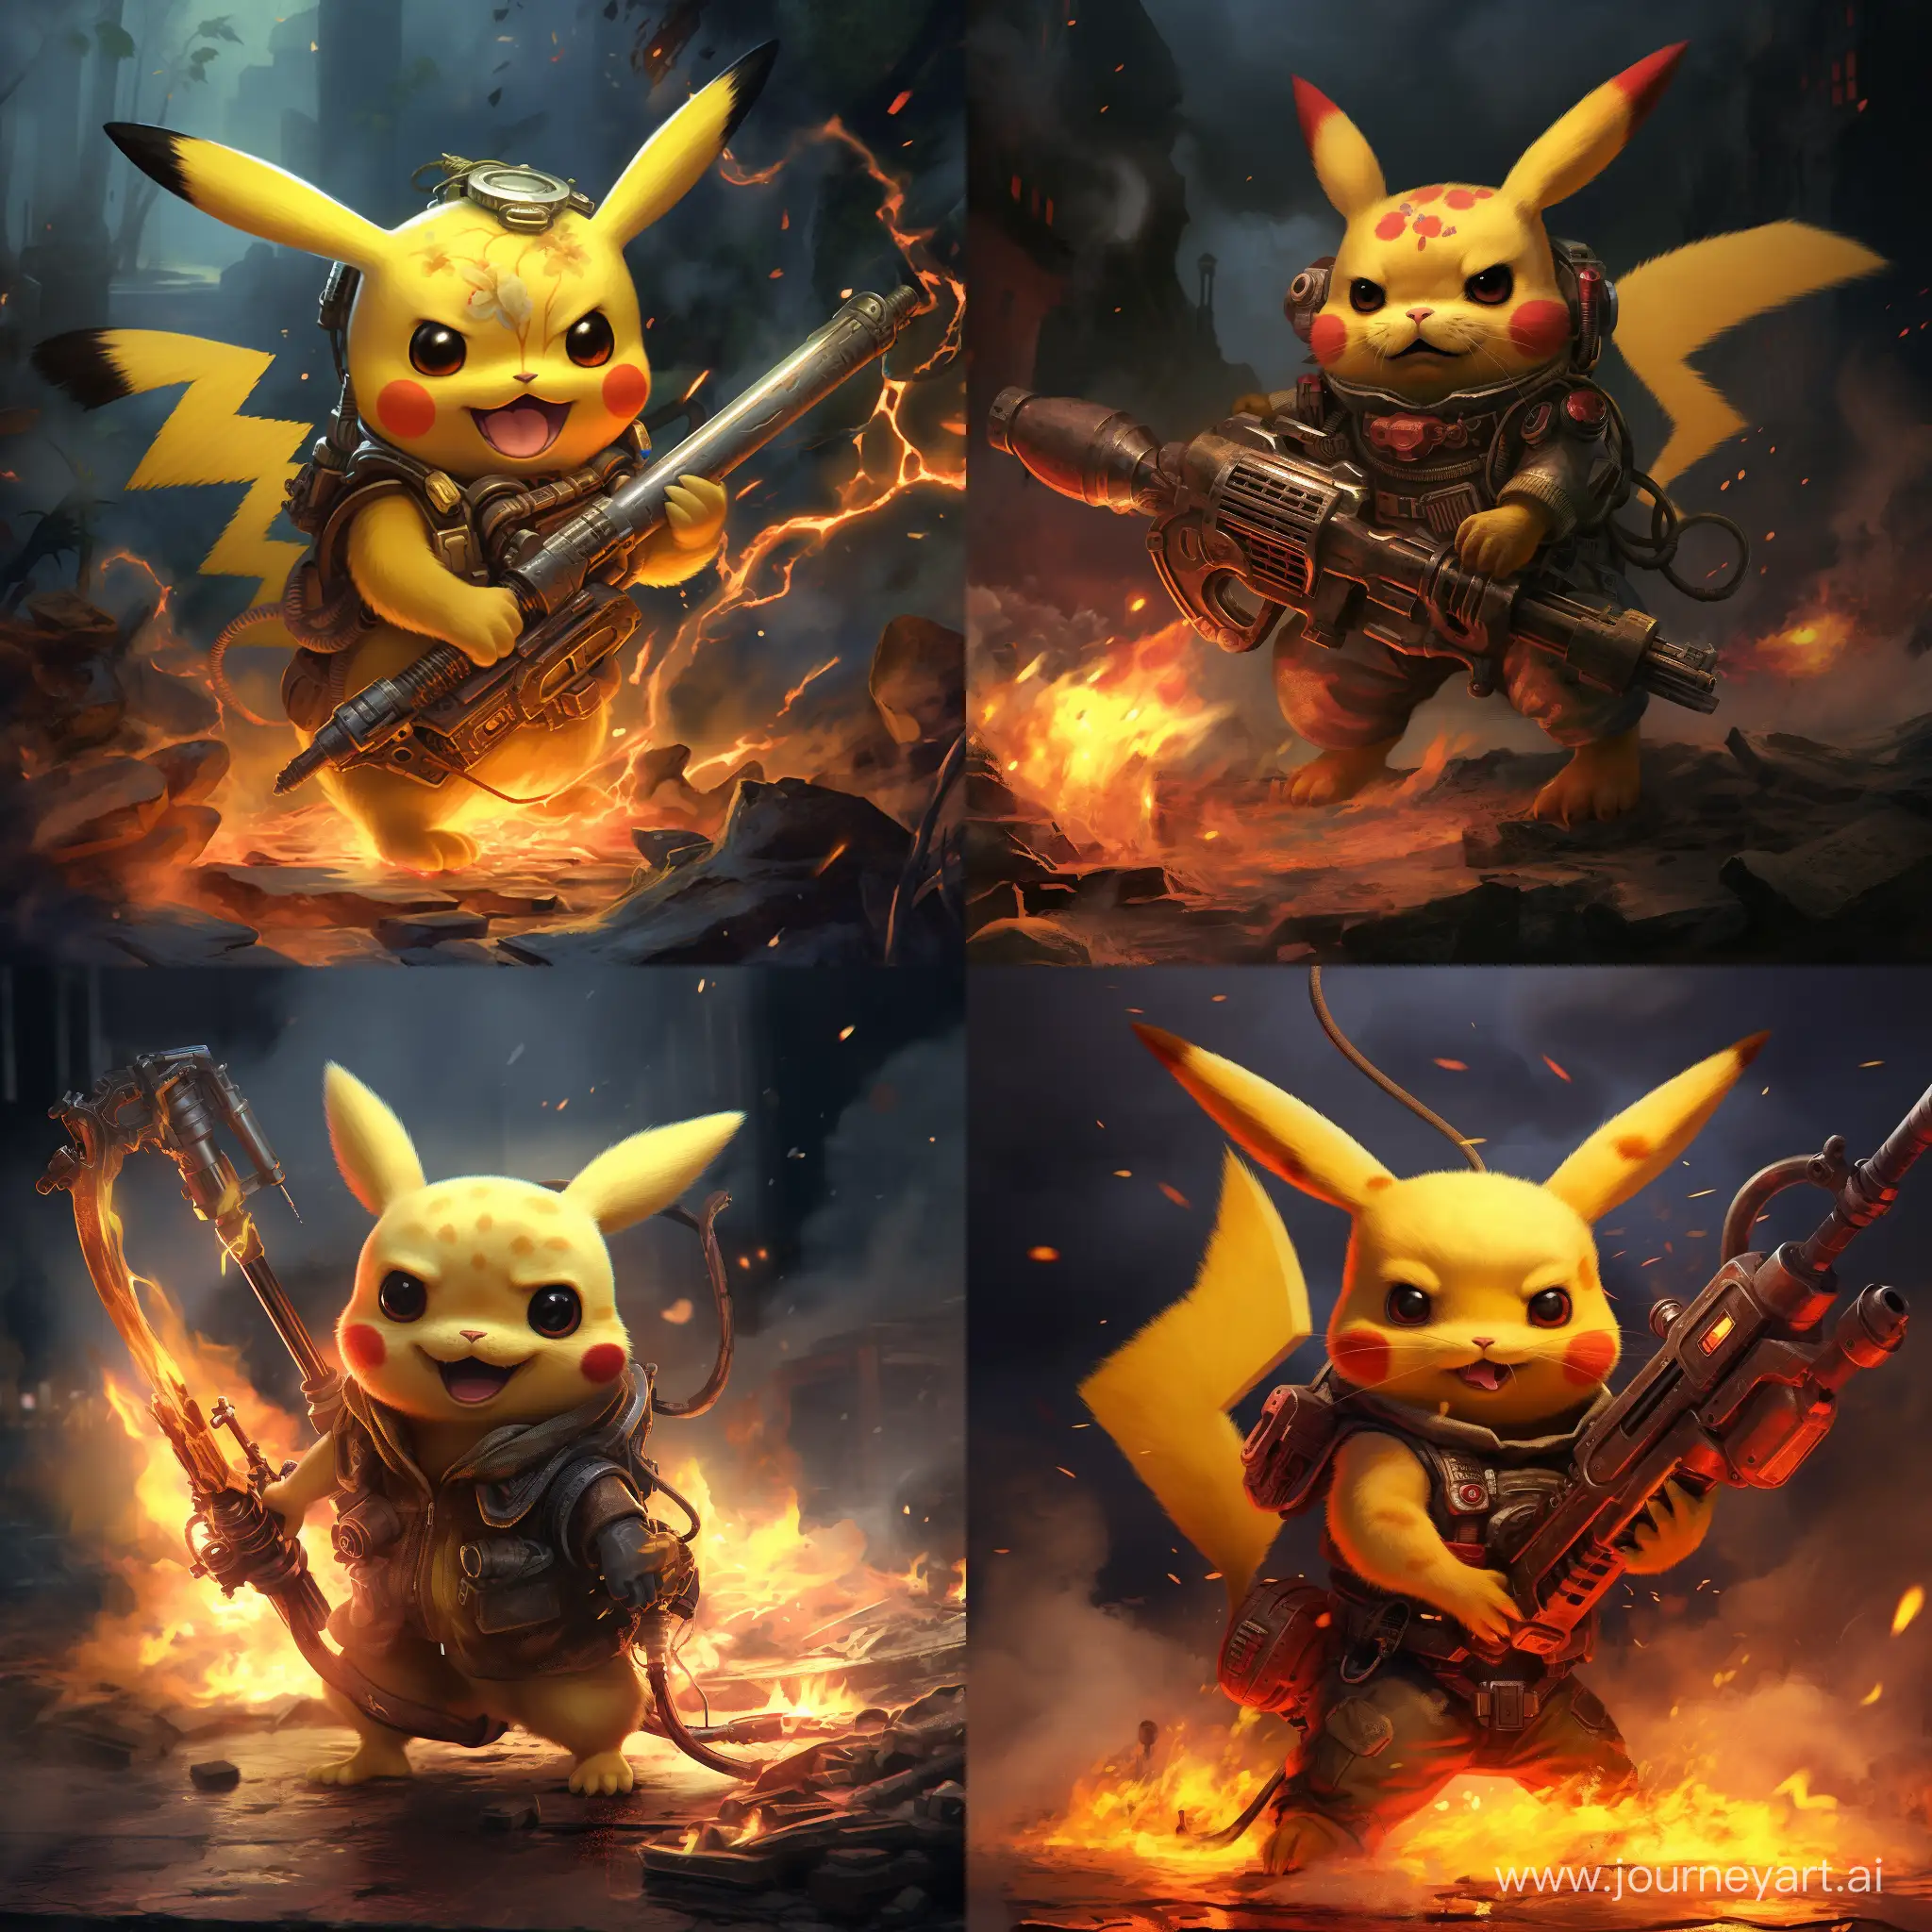 Electric-Pokemon-Pikachu-Using-Flamethrower-Attack